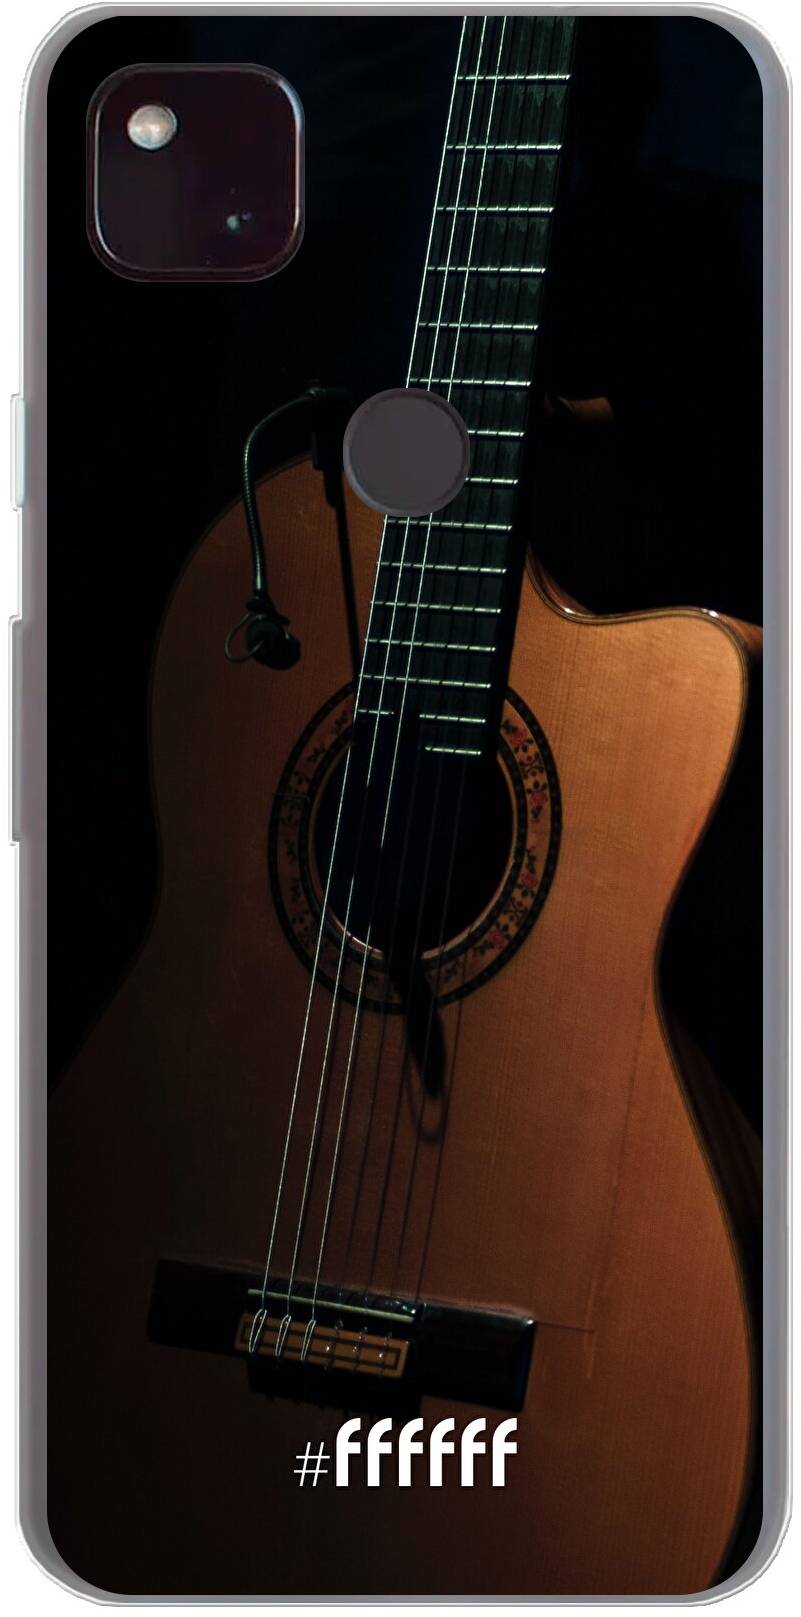 Guitar Pixel 4a 5G